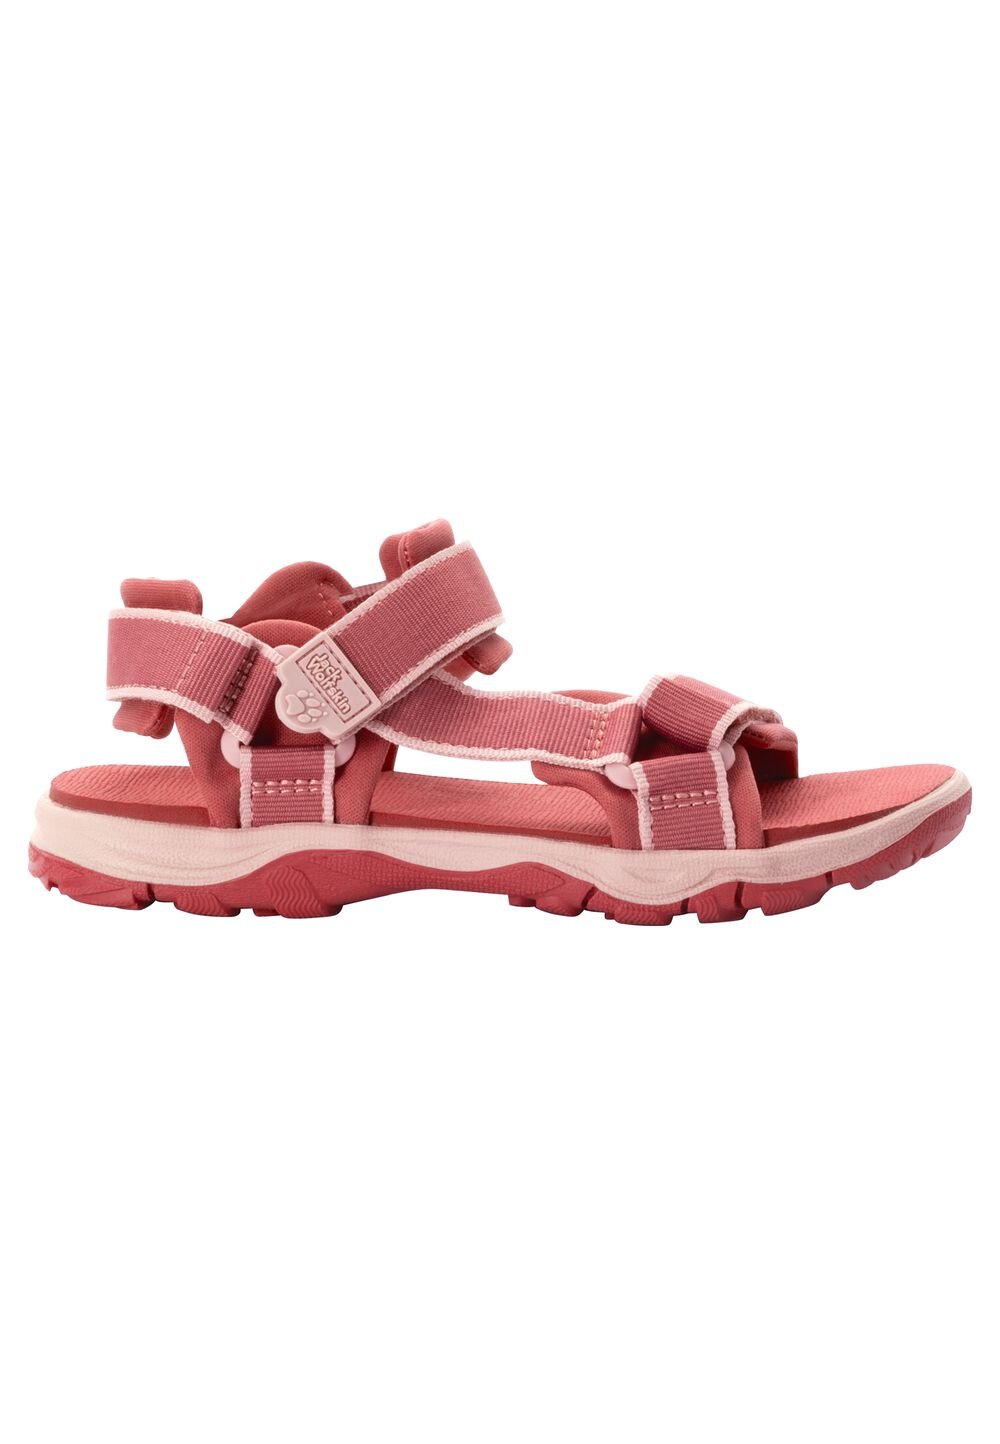 Jack Wolfskin Seven Seas 3 Kids Kinderen sandalen 35 soft pink soft pink